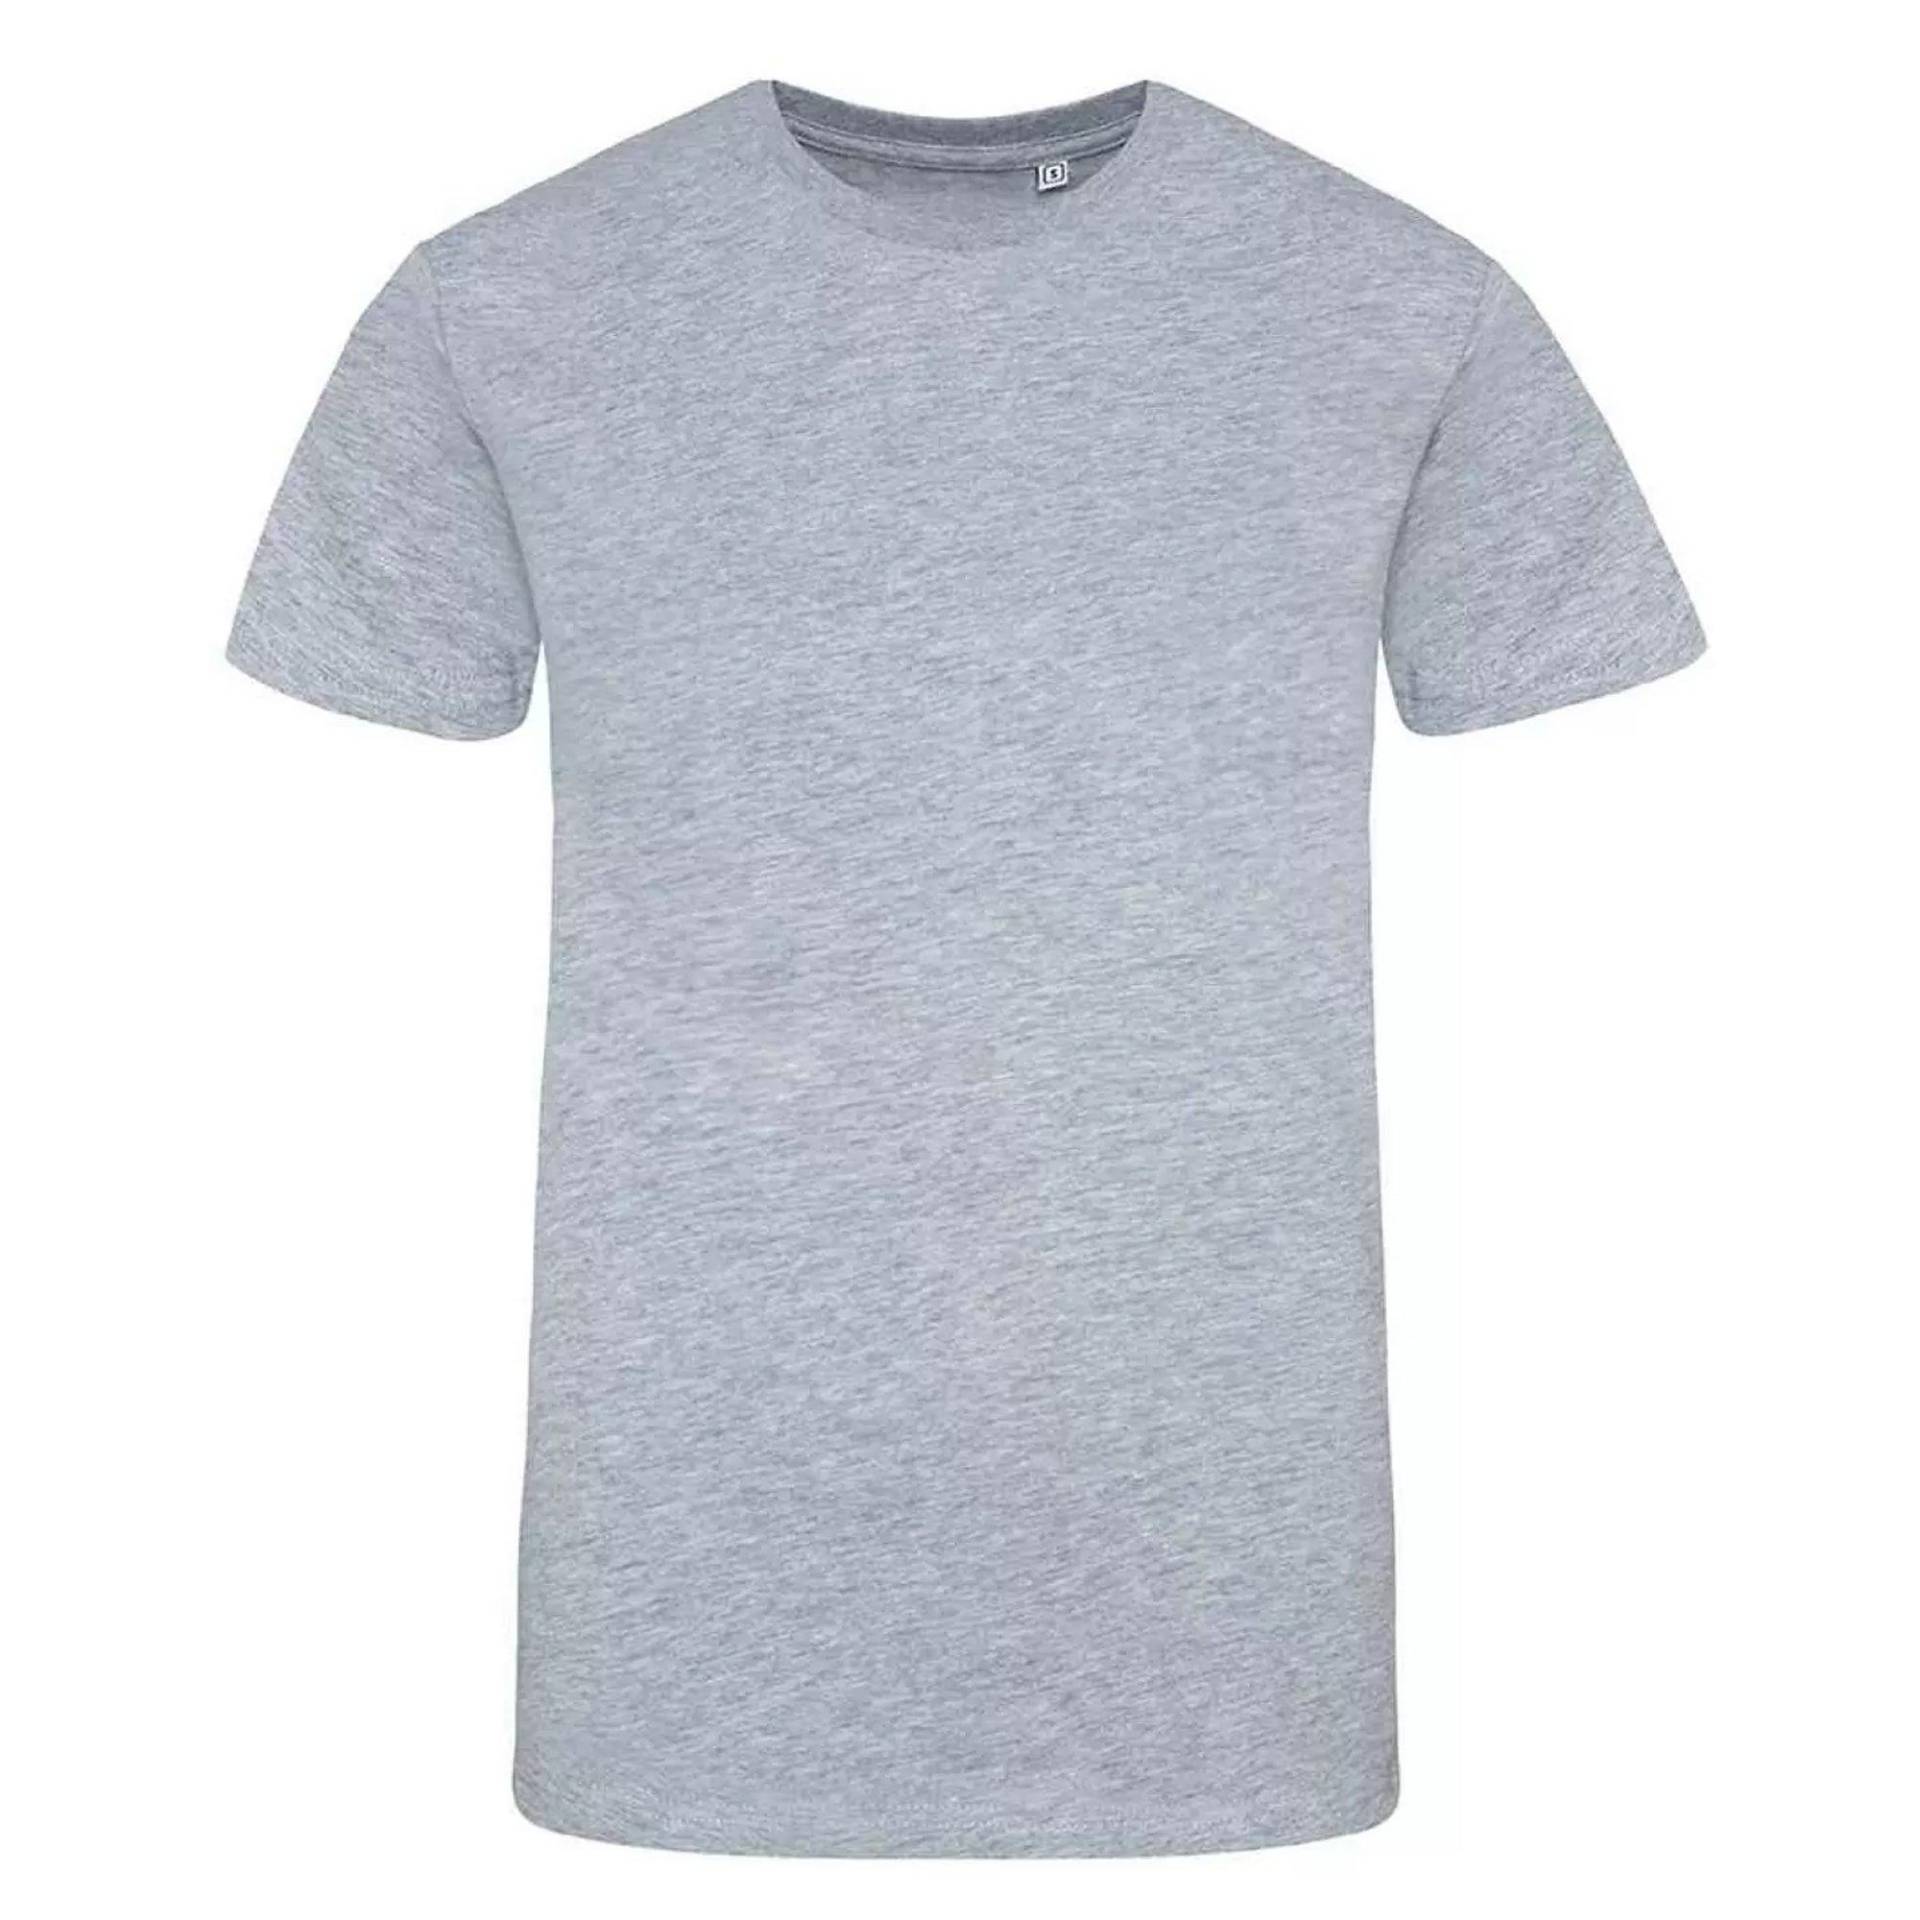 100 Tshirt Damen Grau XL von AWDis